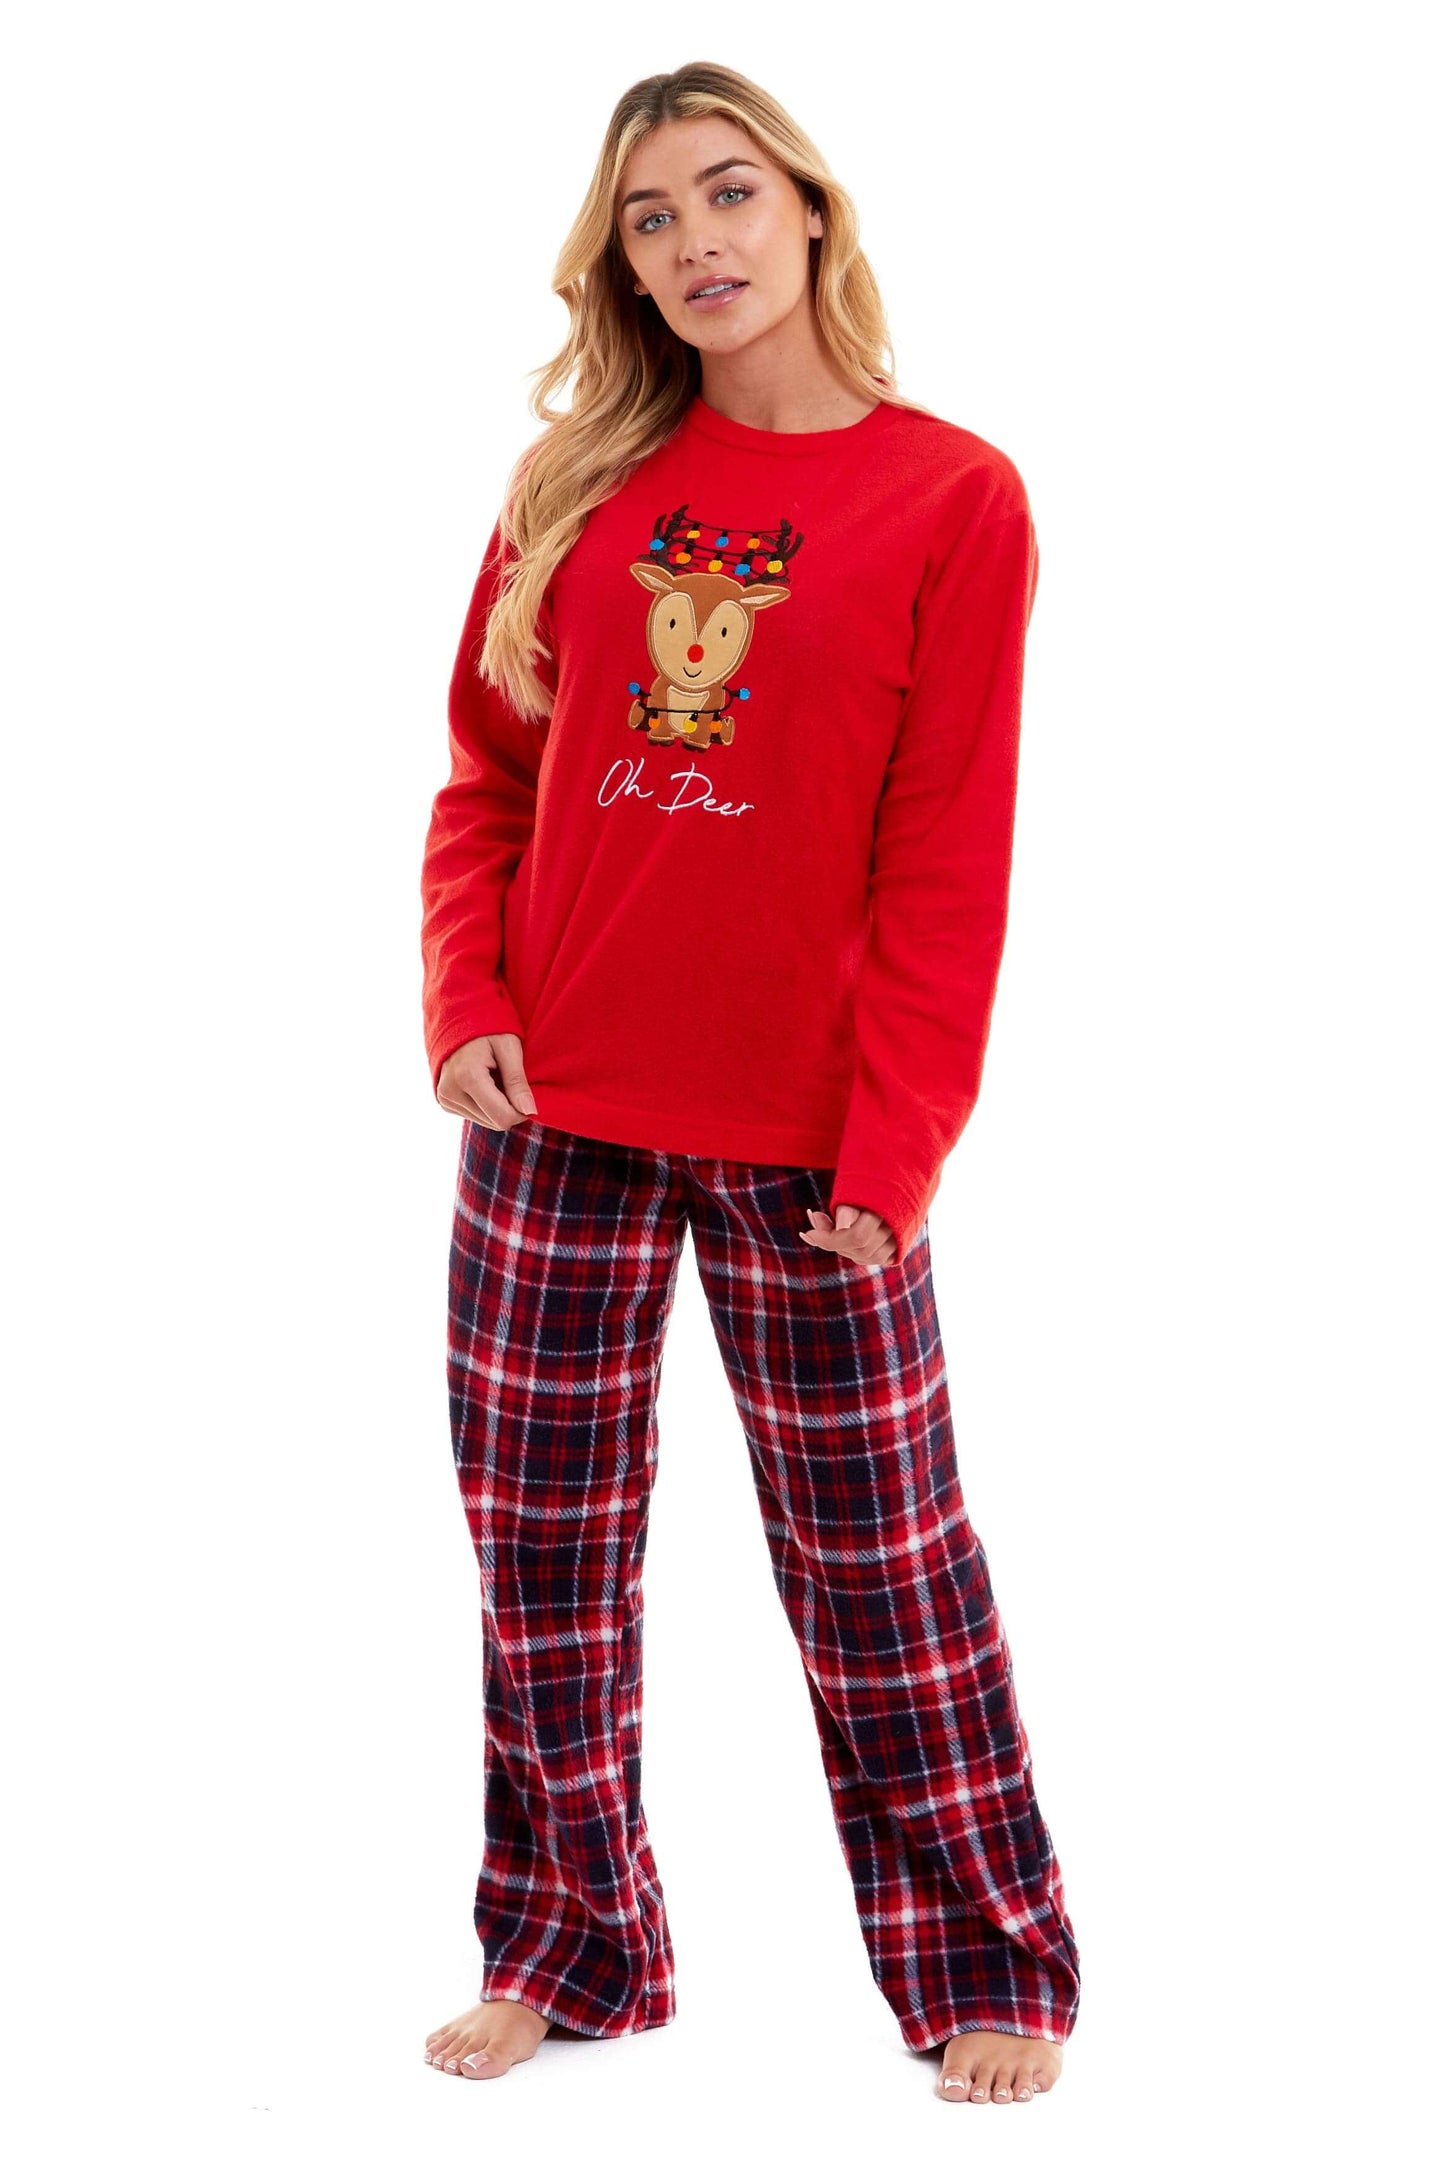 Reindeer Polar Fleece Pyjama Set, Cosy Everyday Loungewear, Christmas Gift Idea. Buy now for £17.00. A Pyjamas by Daisy Dreamer. 12-14, 16-18, 18-20, 8-10, animal, check, christmas, daisy dreamer, festive, fleece, gift, ladies, long sleeve, loungewear, ni